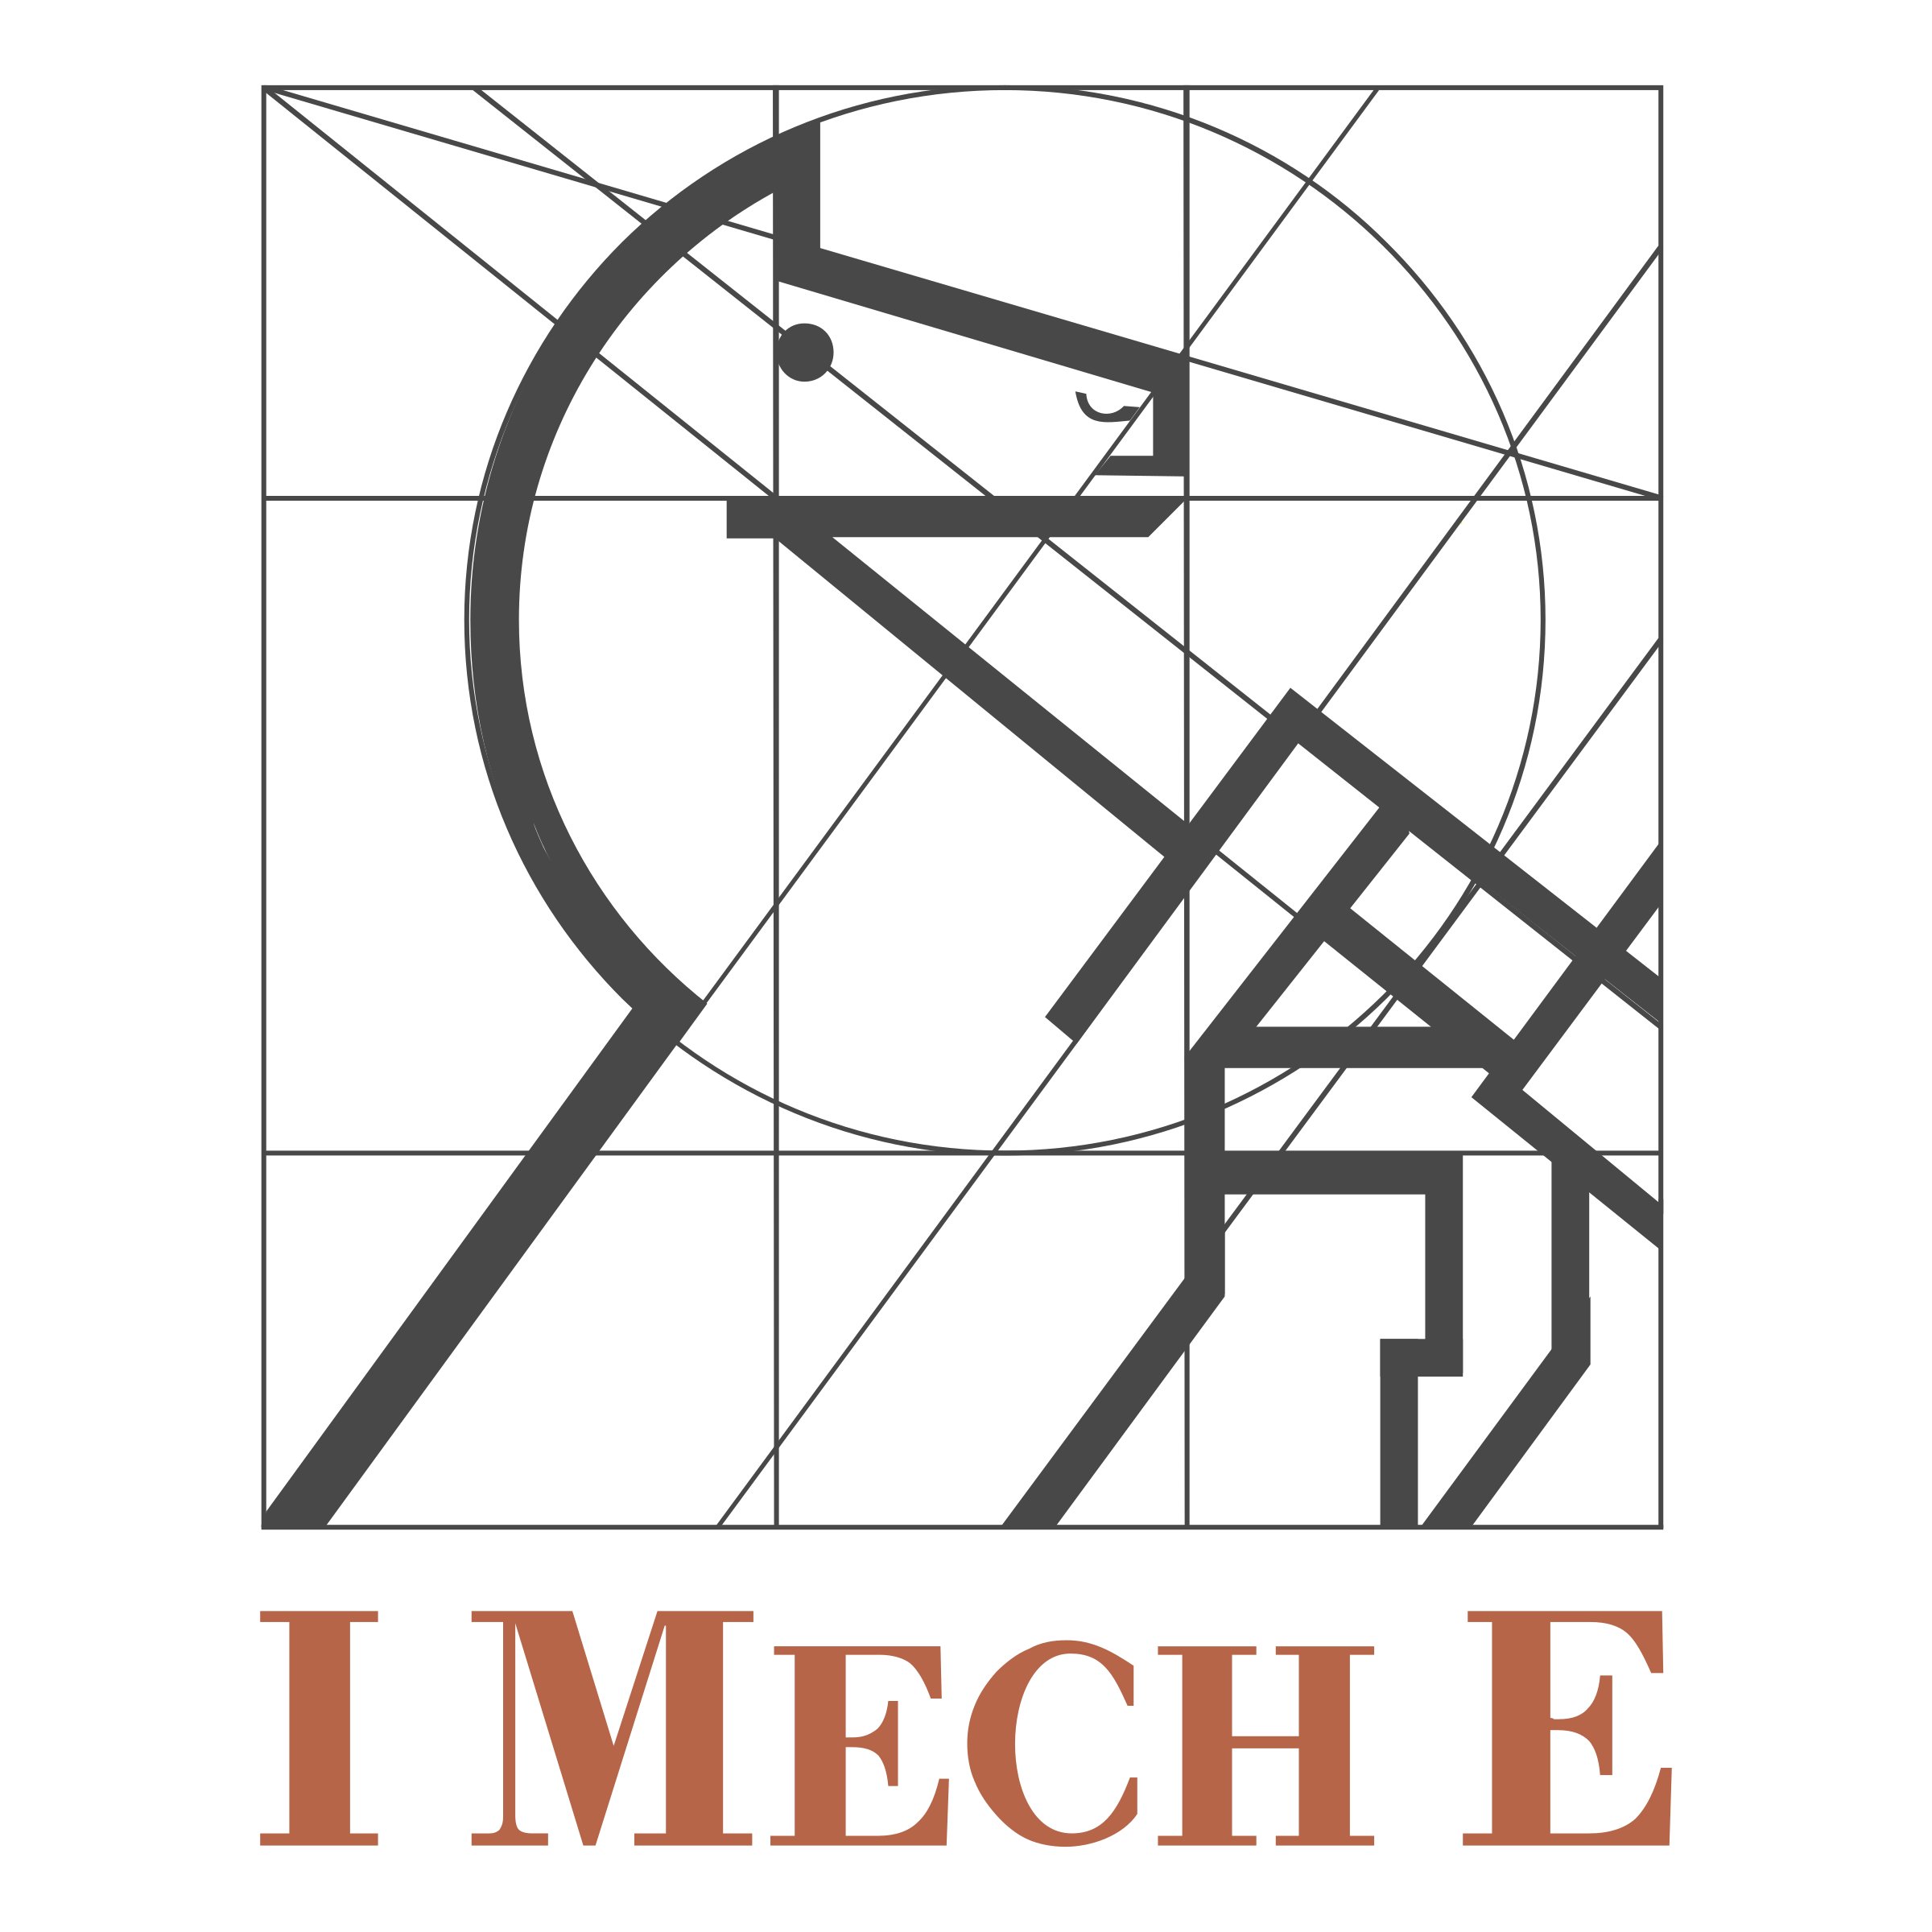 IMechE Logo - IMechE Logo PNG Transparent & SVG Vector - Freebie Supply